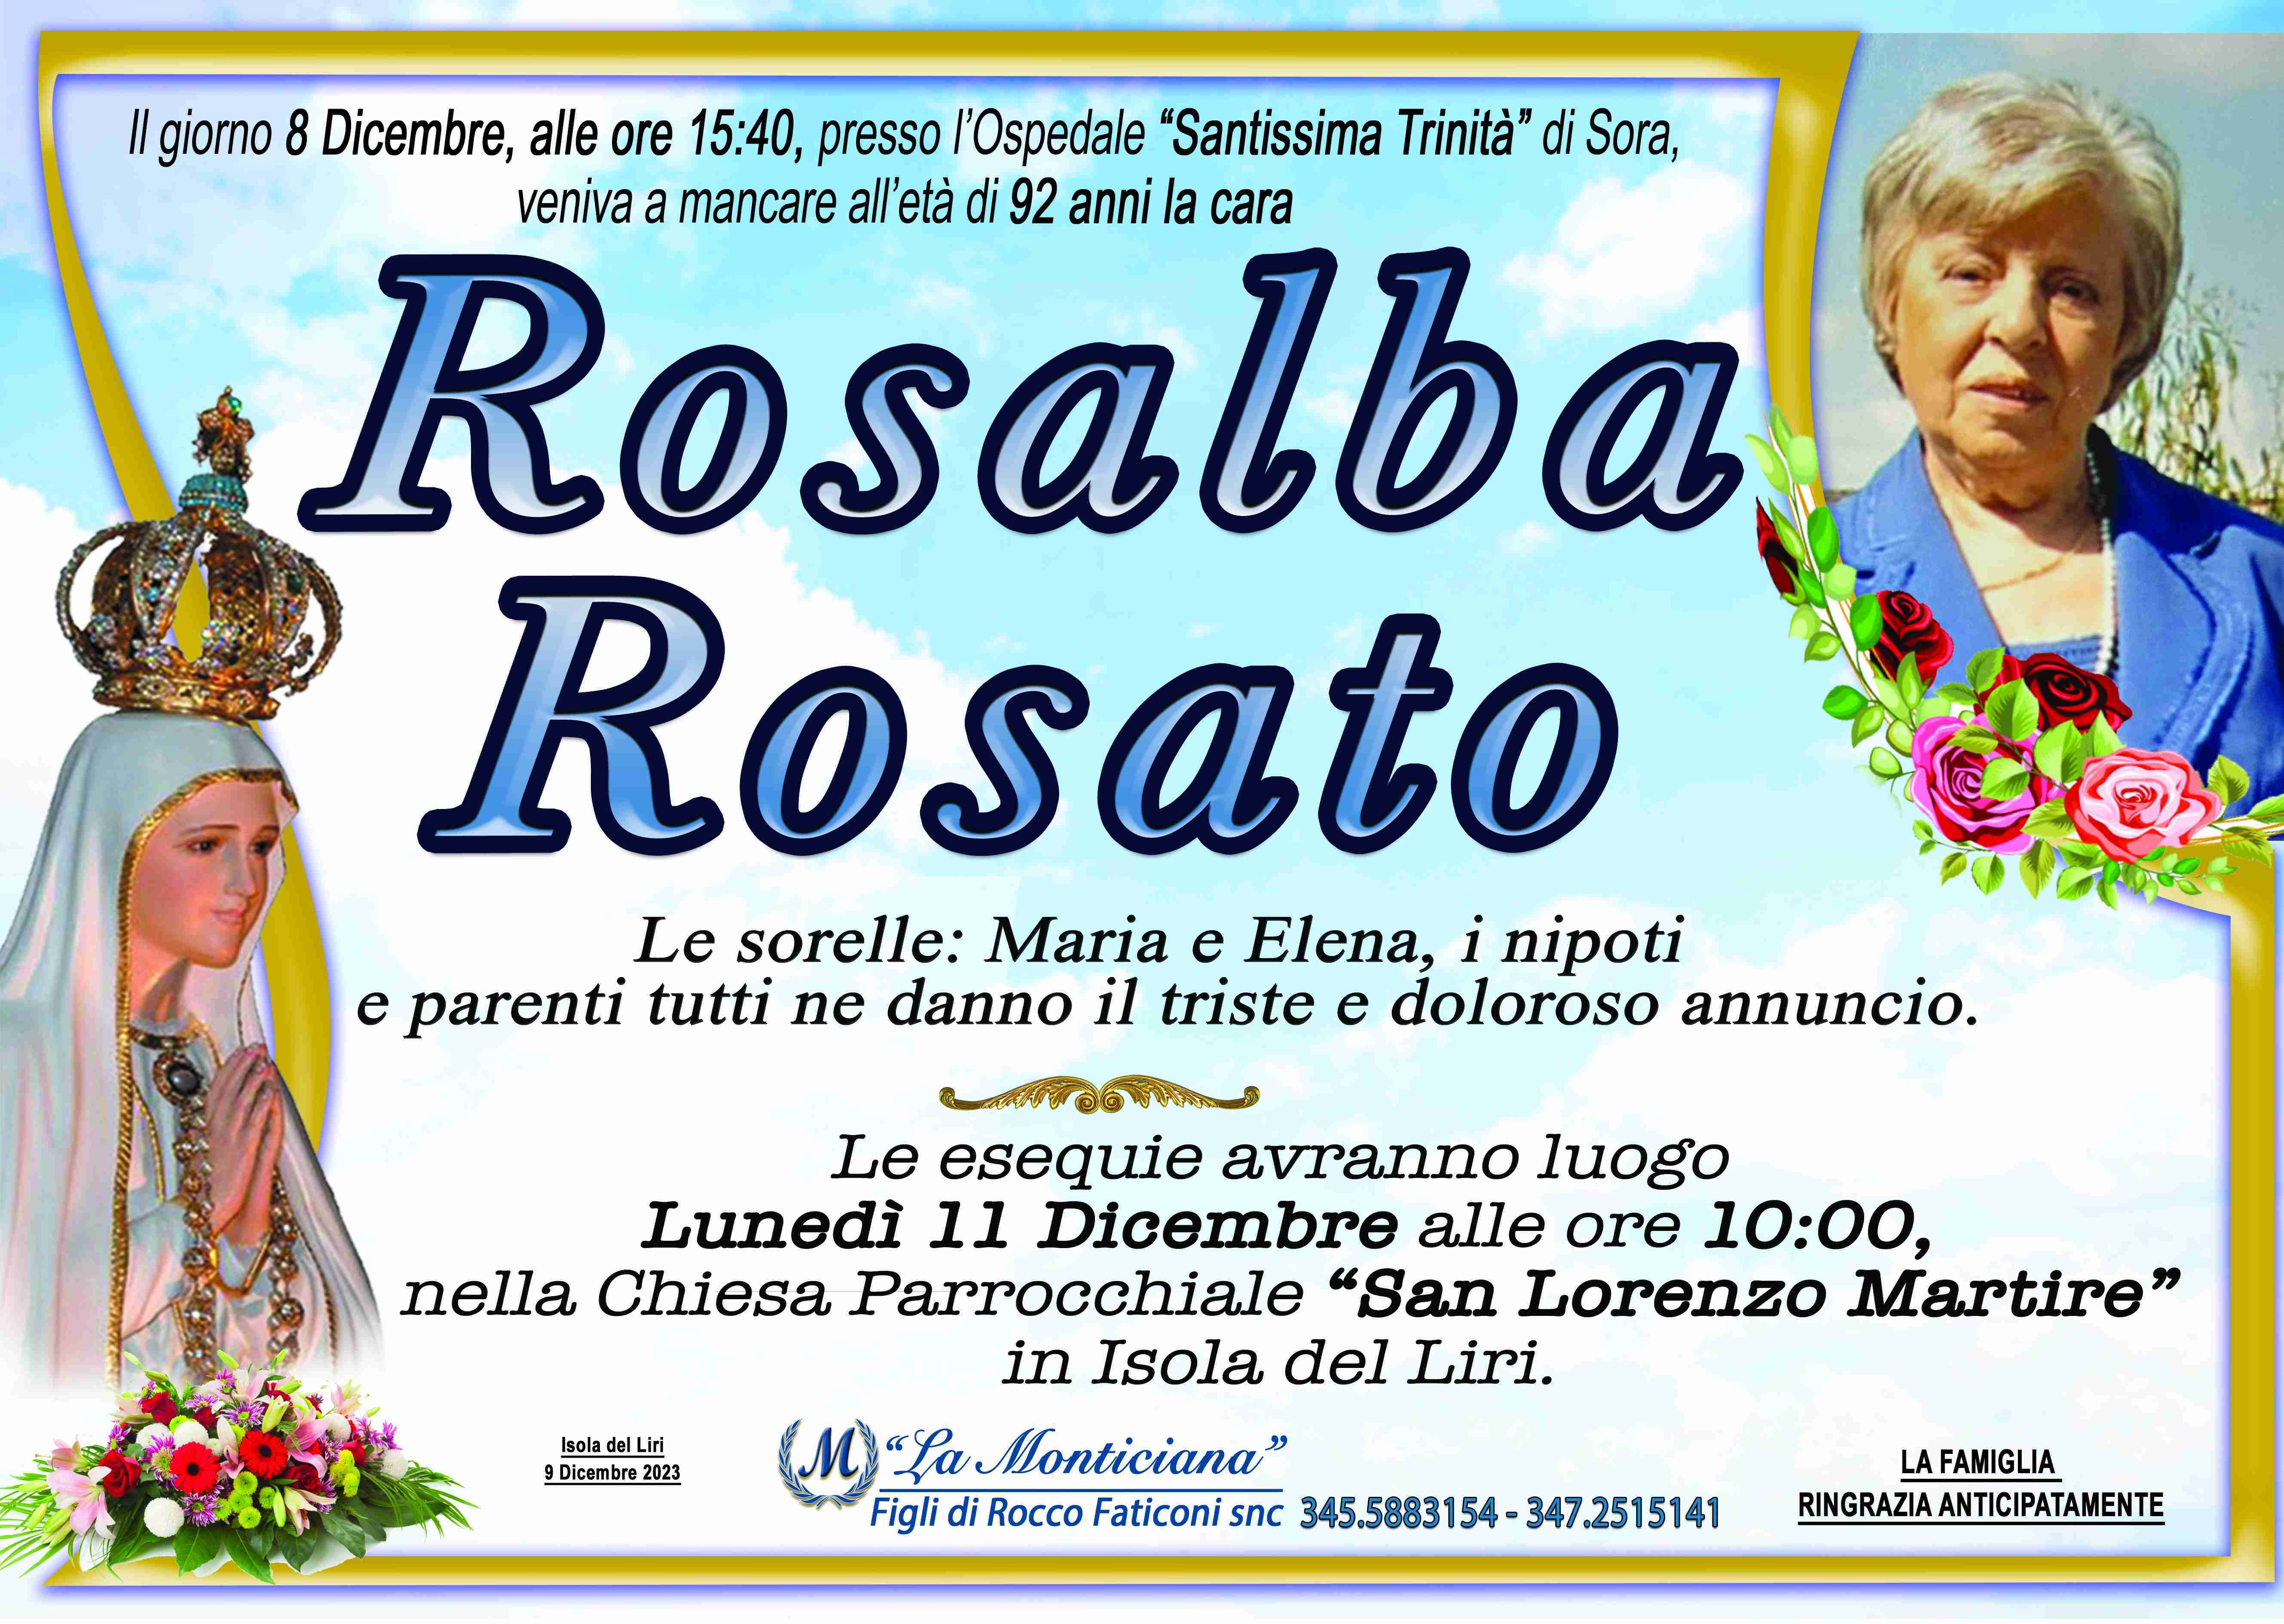 Rosalba Rosato